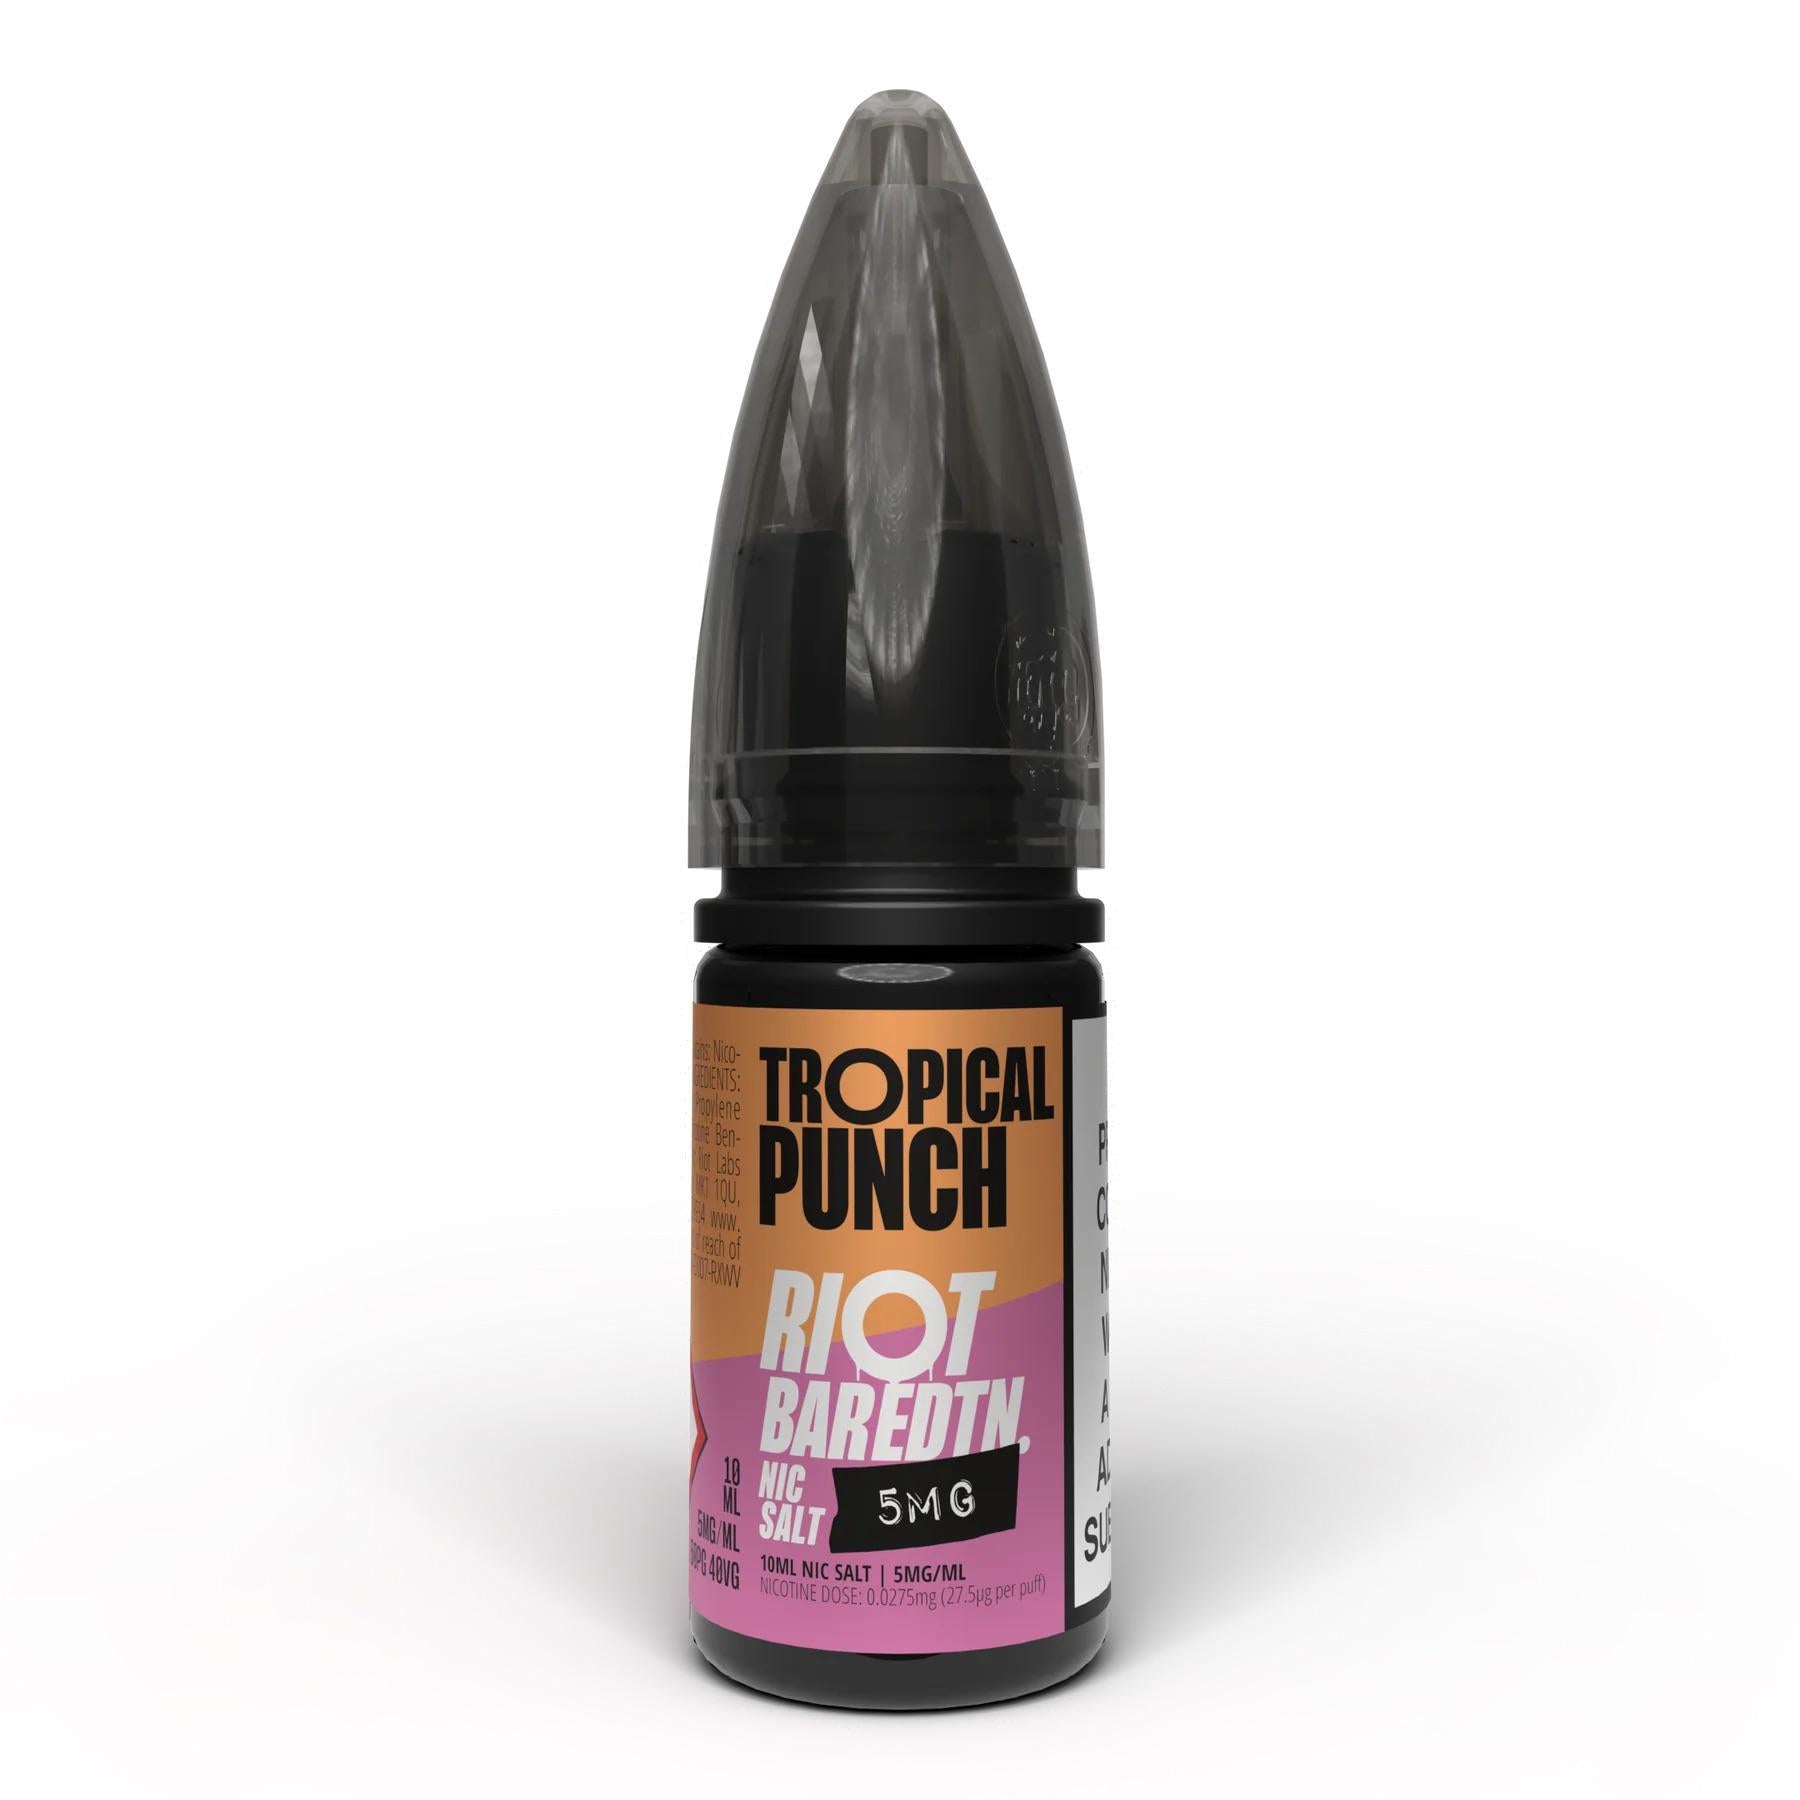 RIOT Bar EDTN - Tropical Punch 10ml E-Liquid - The British Vape Company